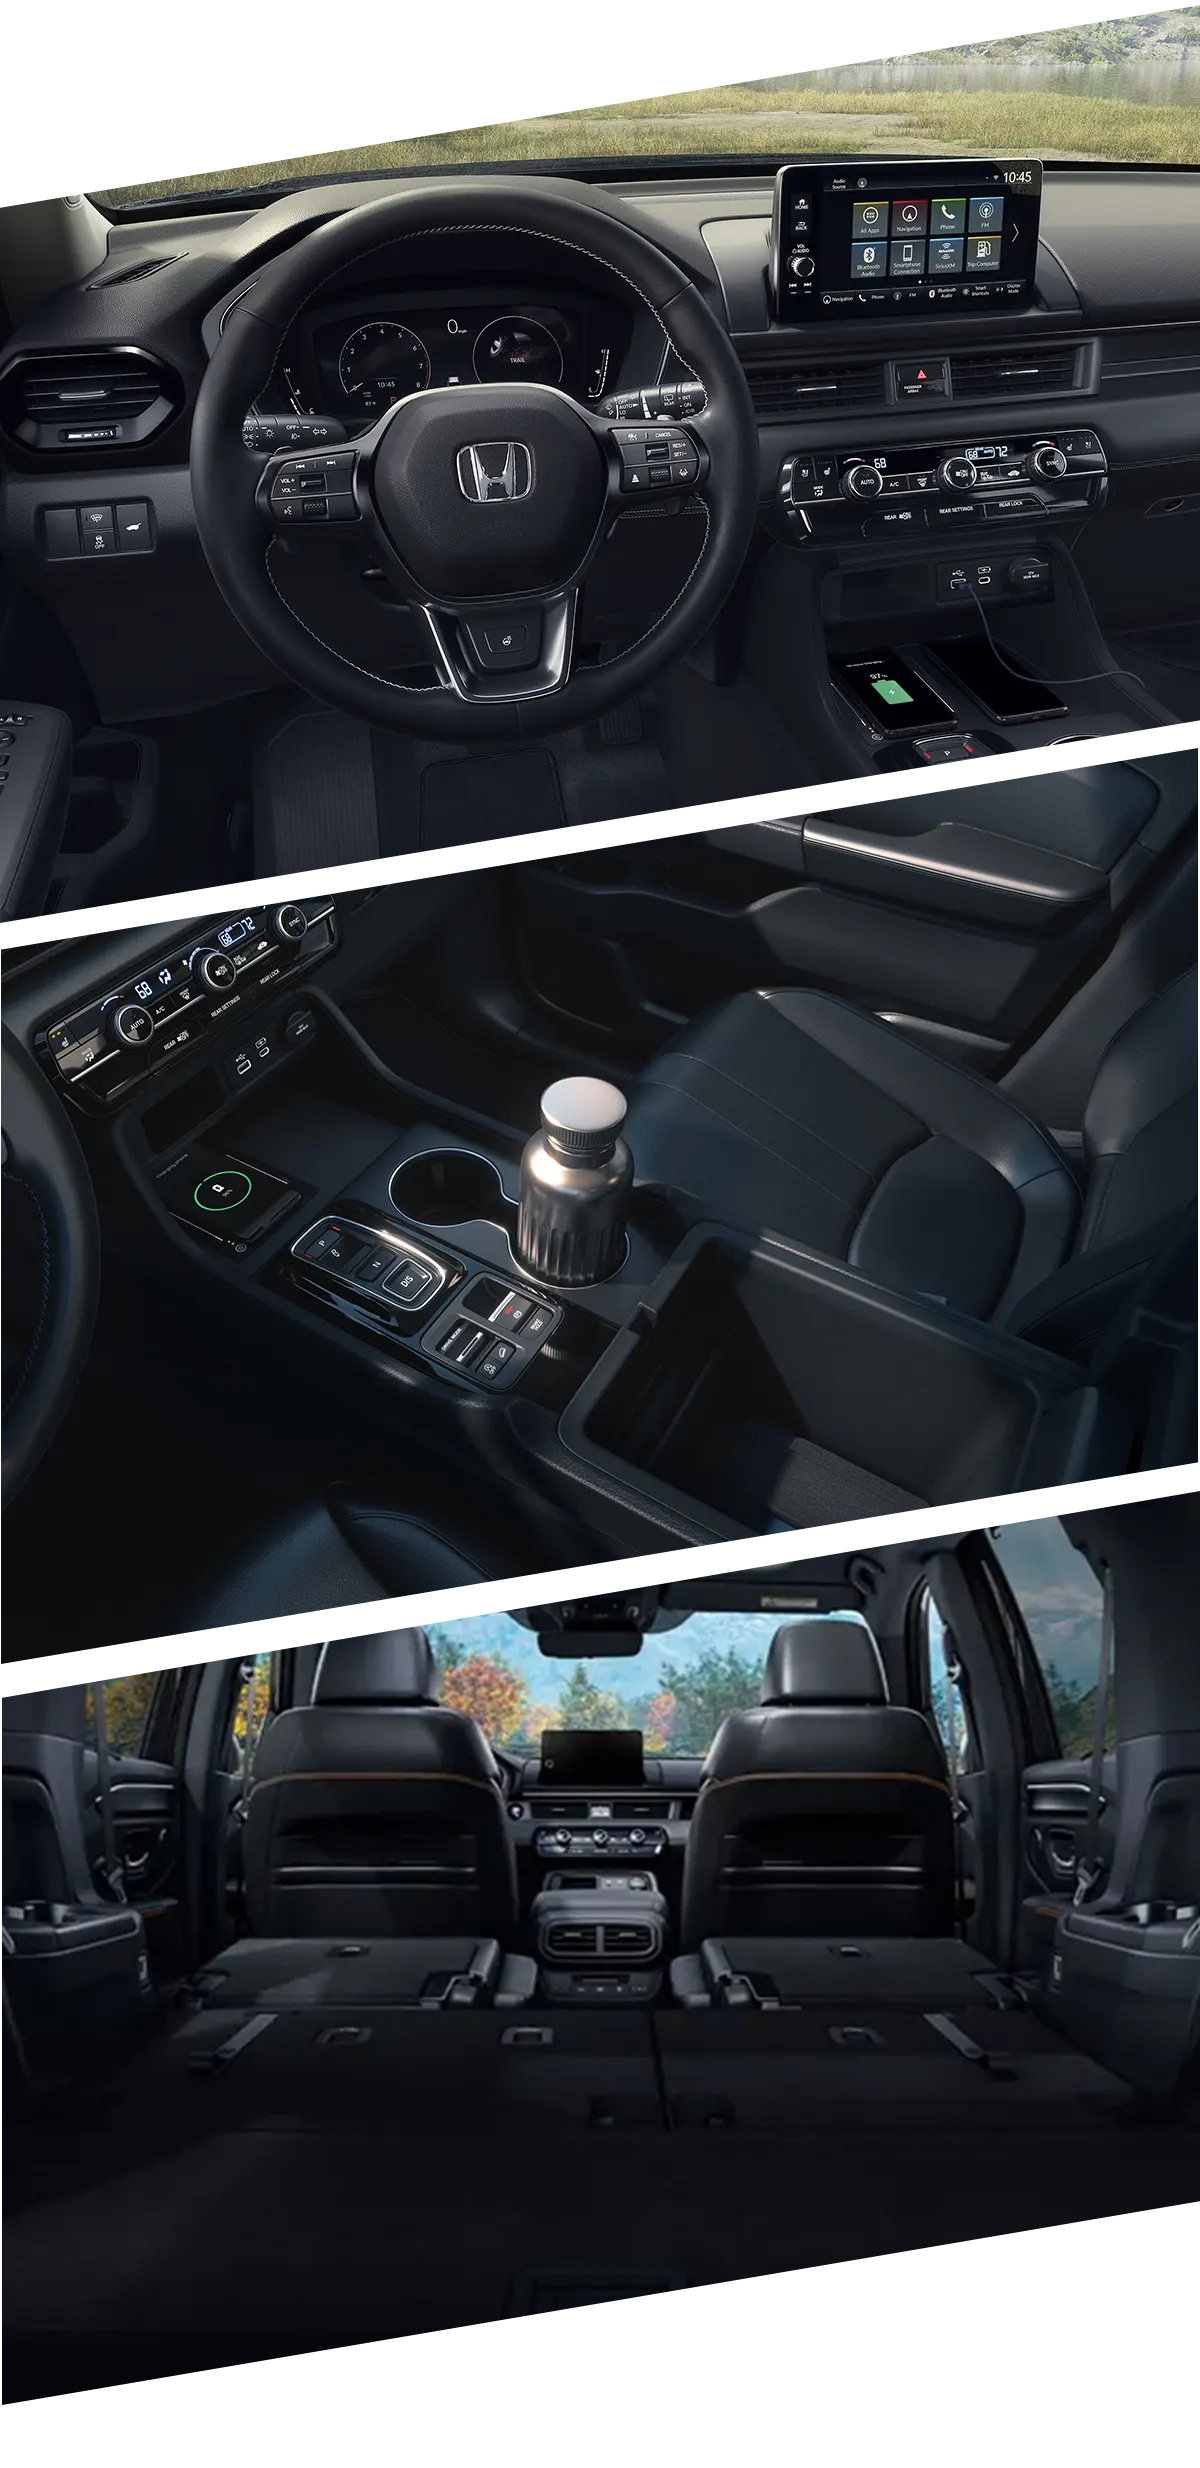 Newest Honda Pilot Interior Images